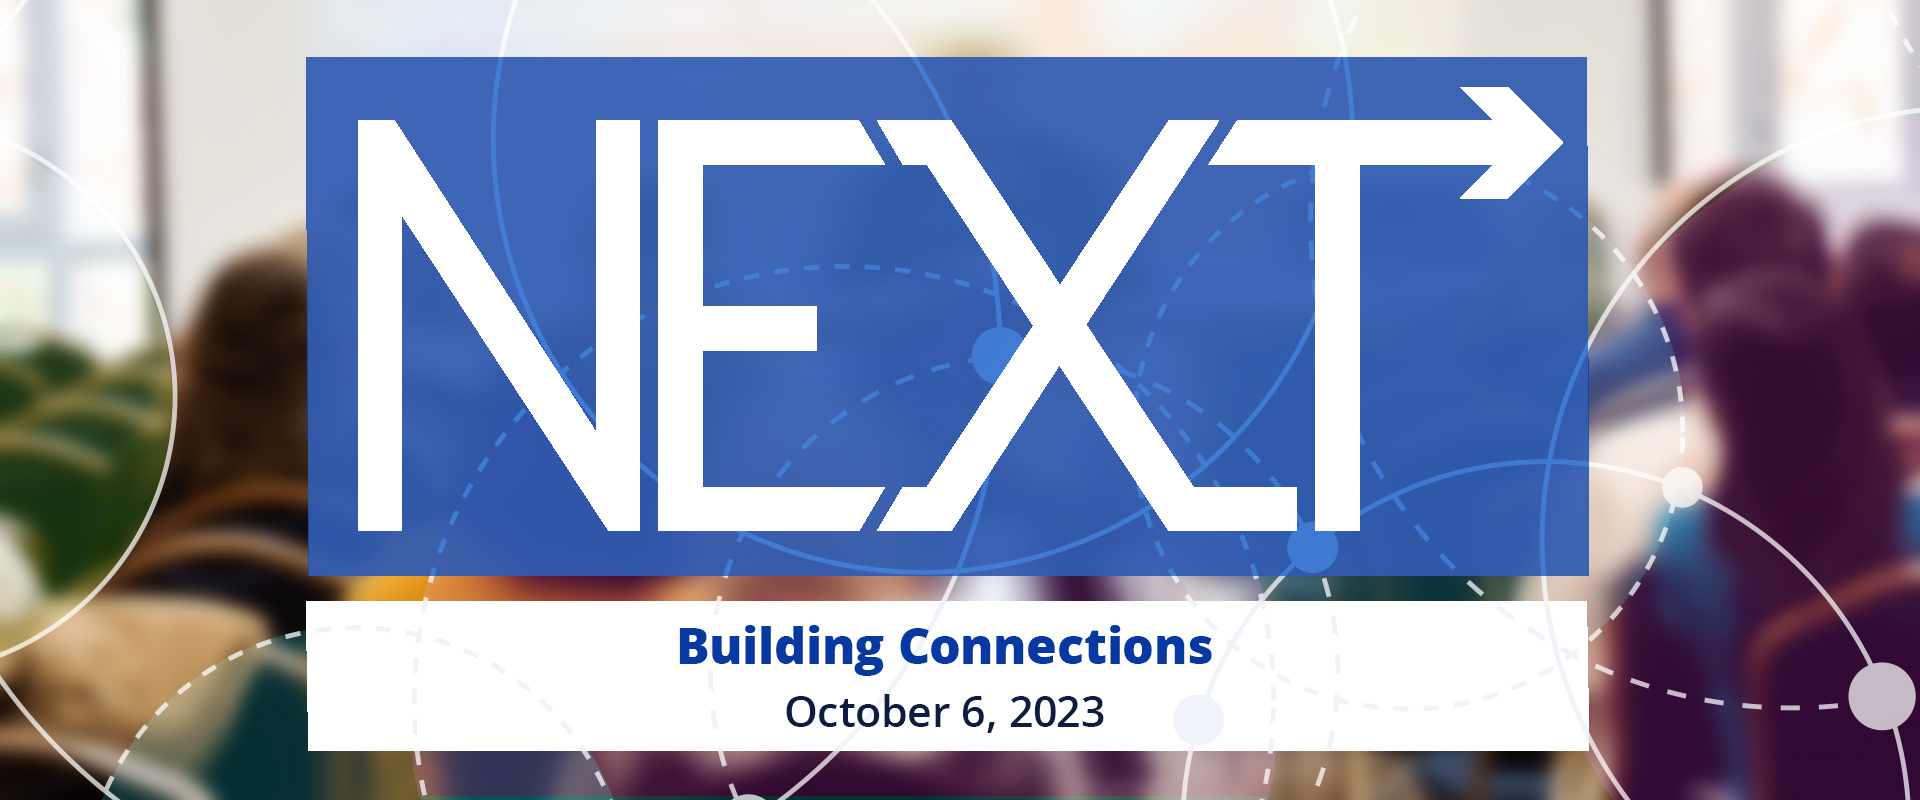 下一个2023年建筑Connections - October 6, 2023